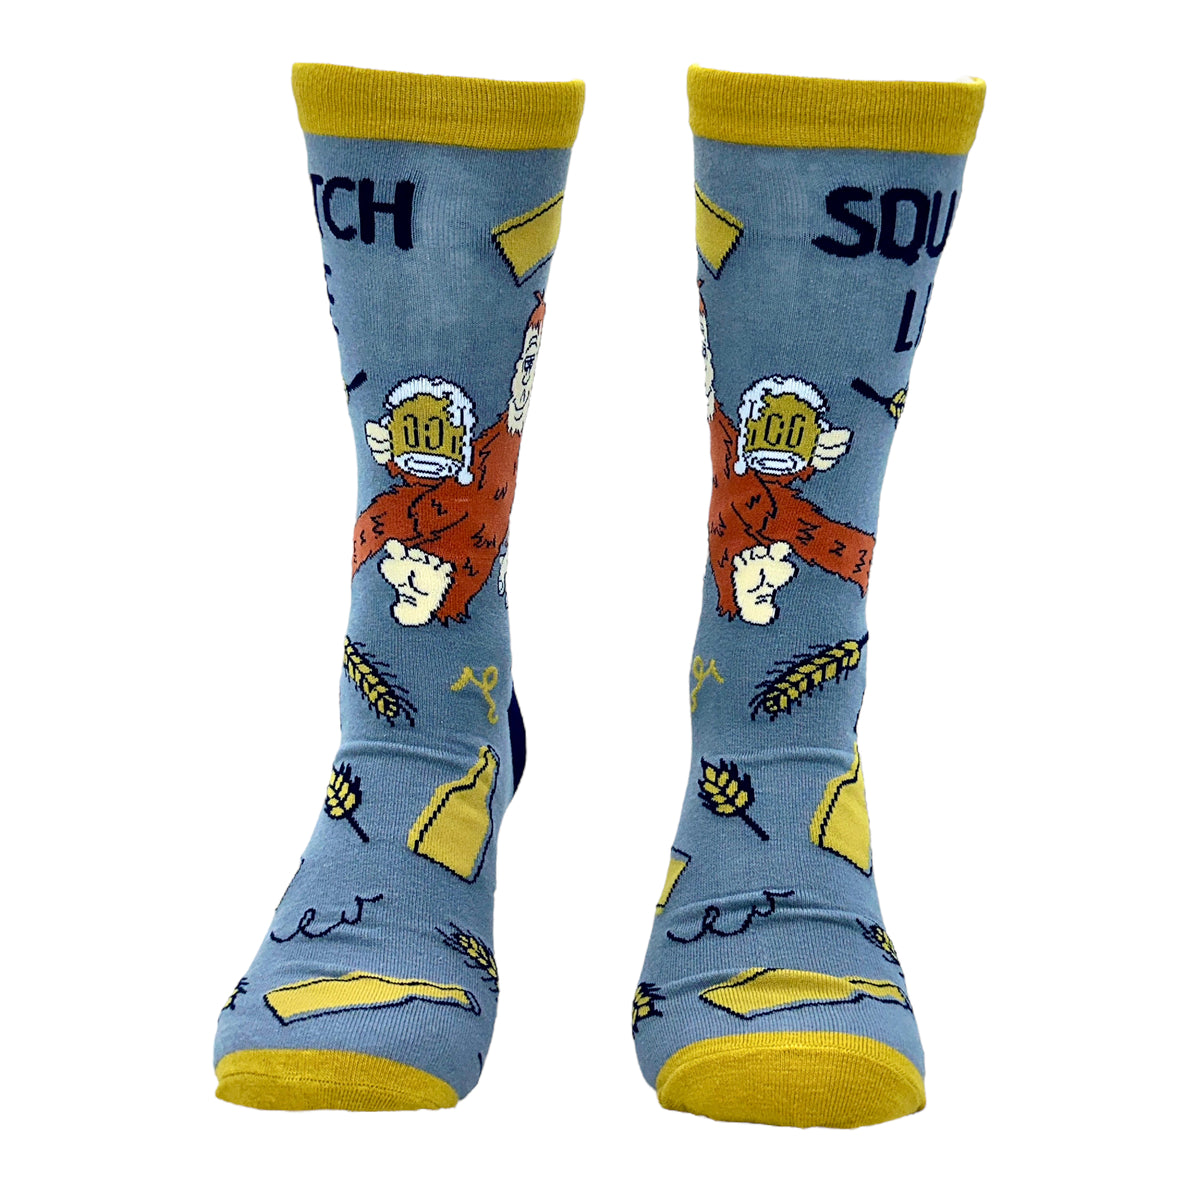 Men&#39;s Squatch Life Socks